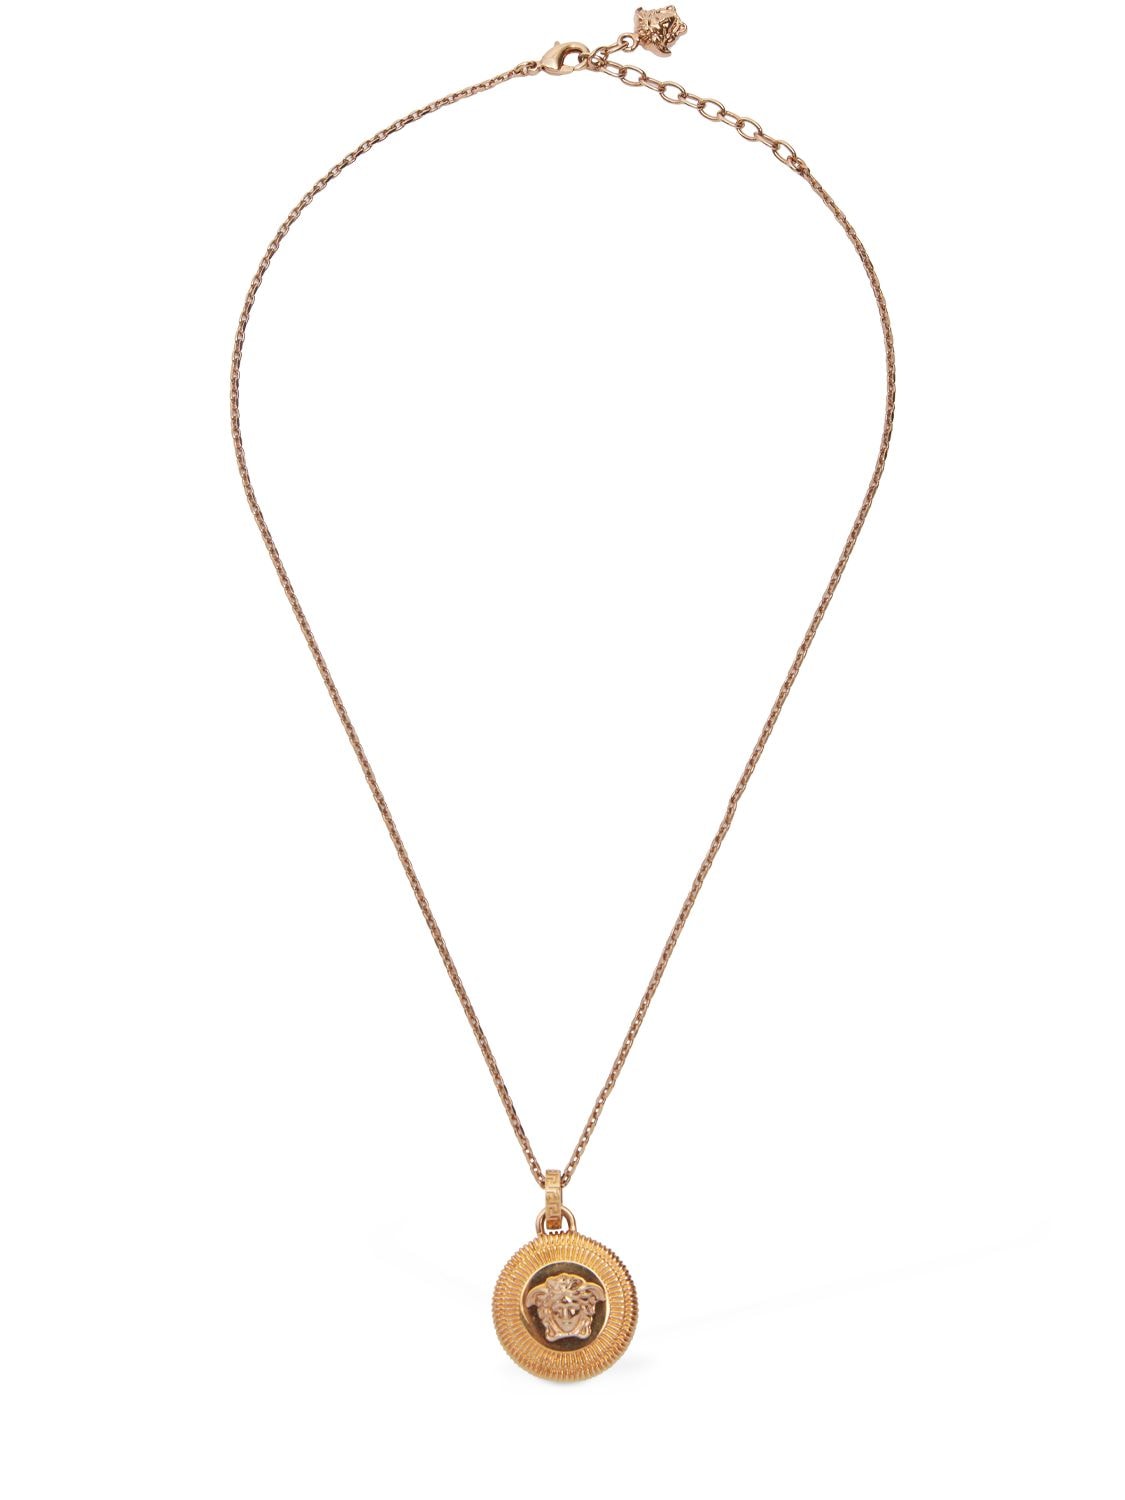 Image of Medusa Tribute Charm Necklace